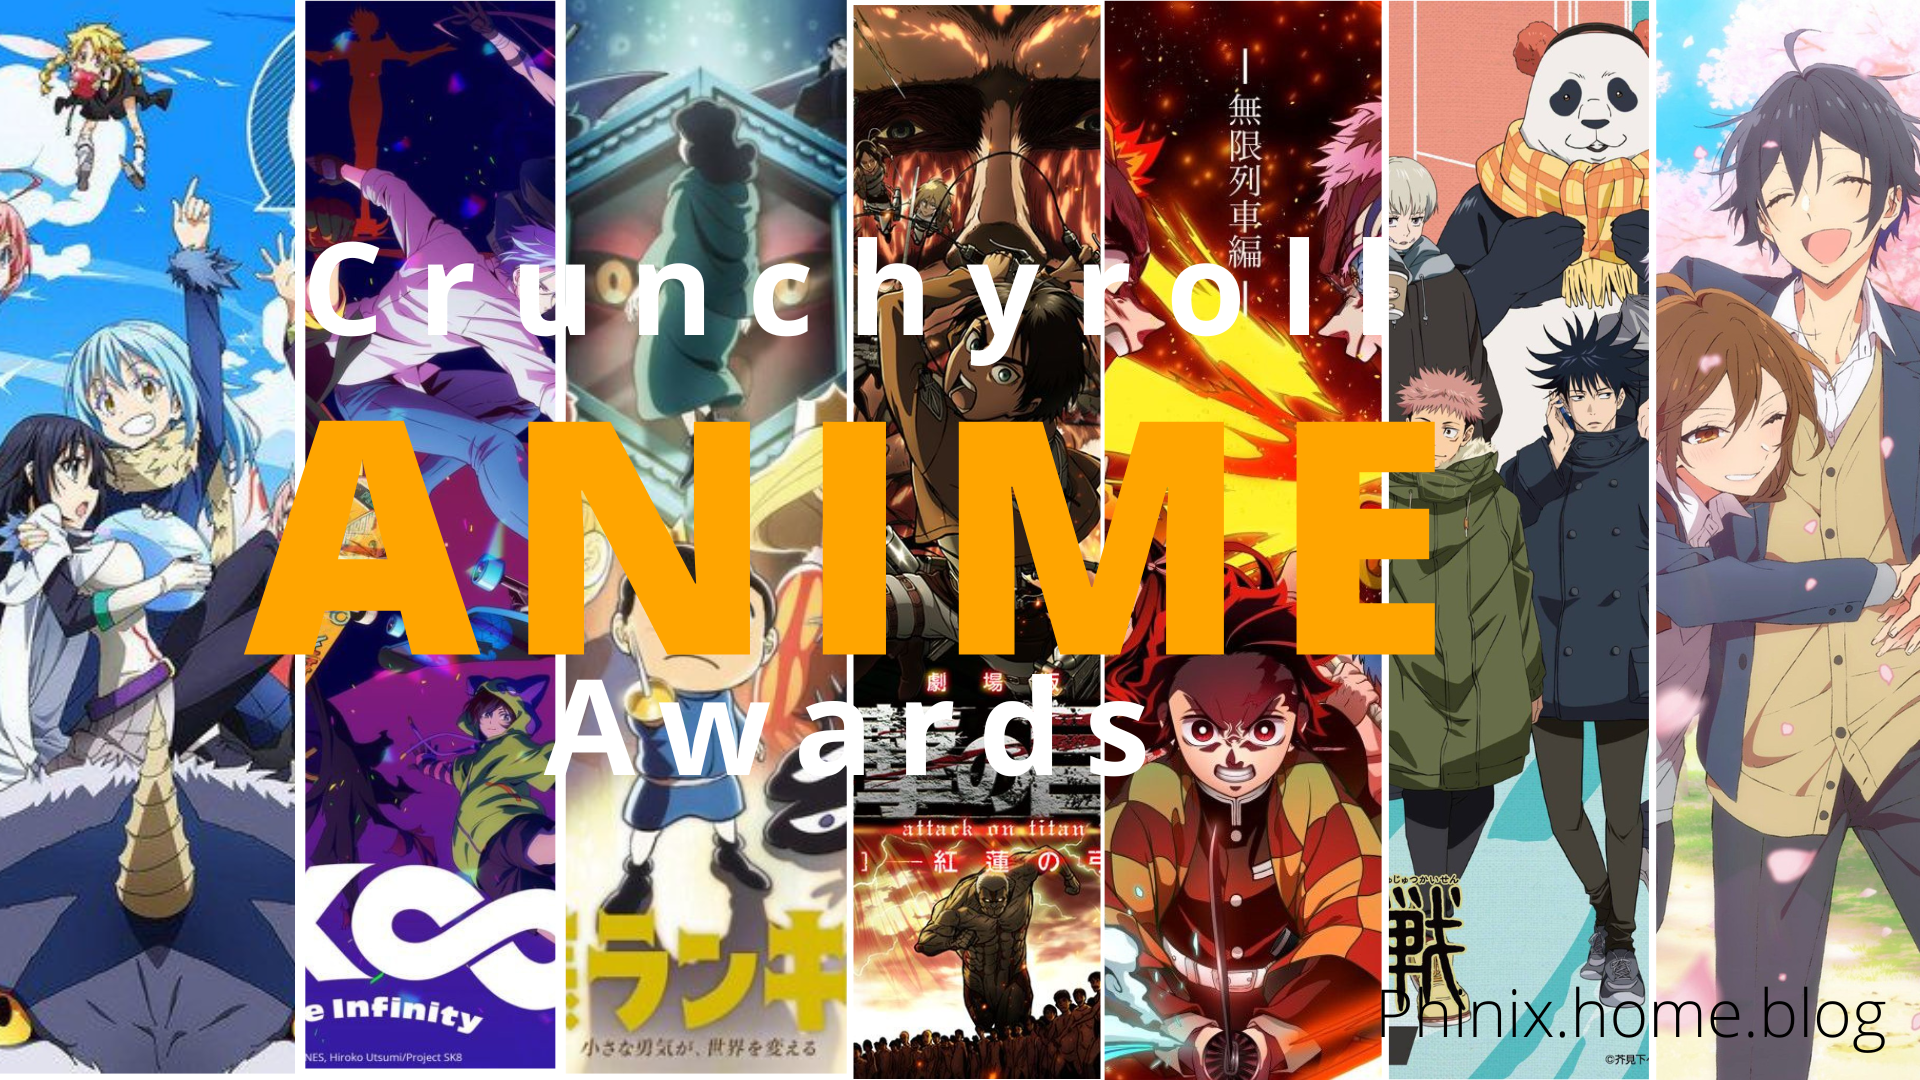 Classroom of the Elite Season 3 Anime Strikes Pose for New Visual